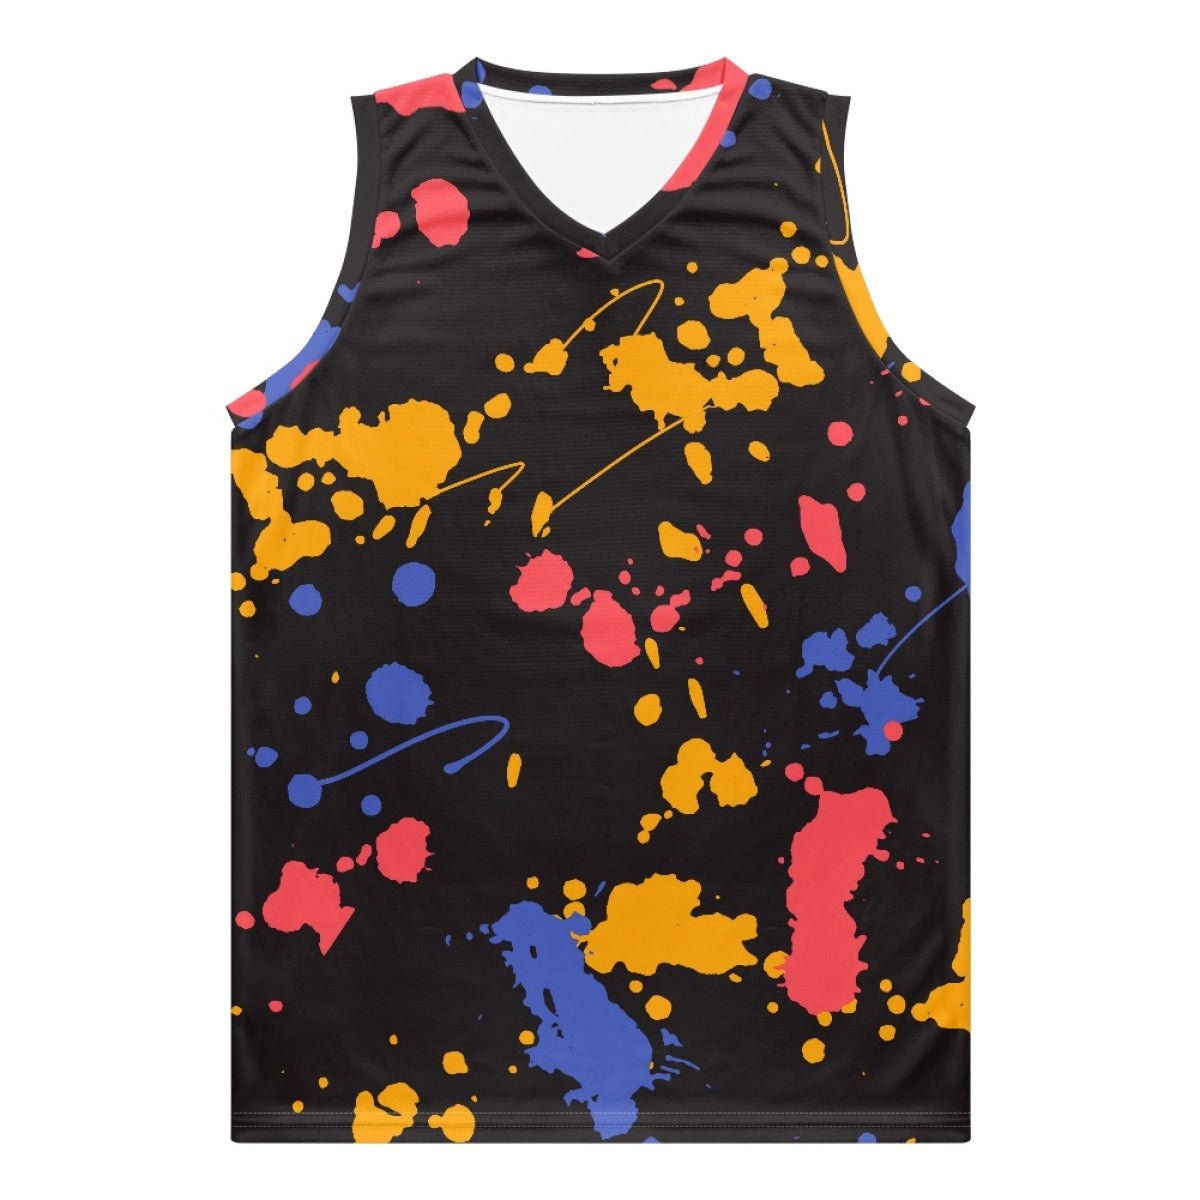 Blakonik | Basketball Jersey Wear with Paint Splatter Pattern S-4XL - Mens Jersey